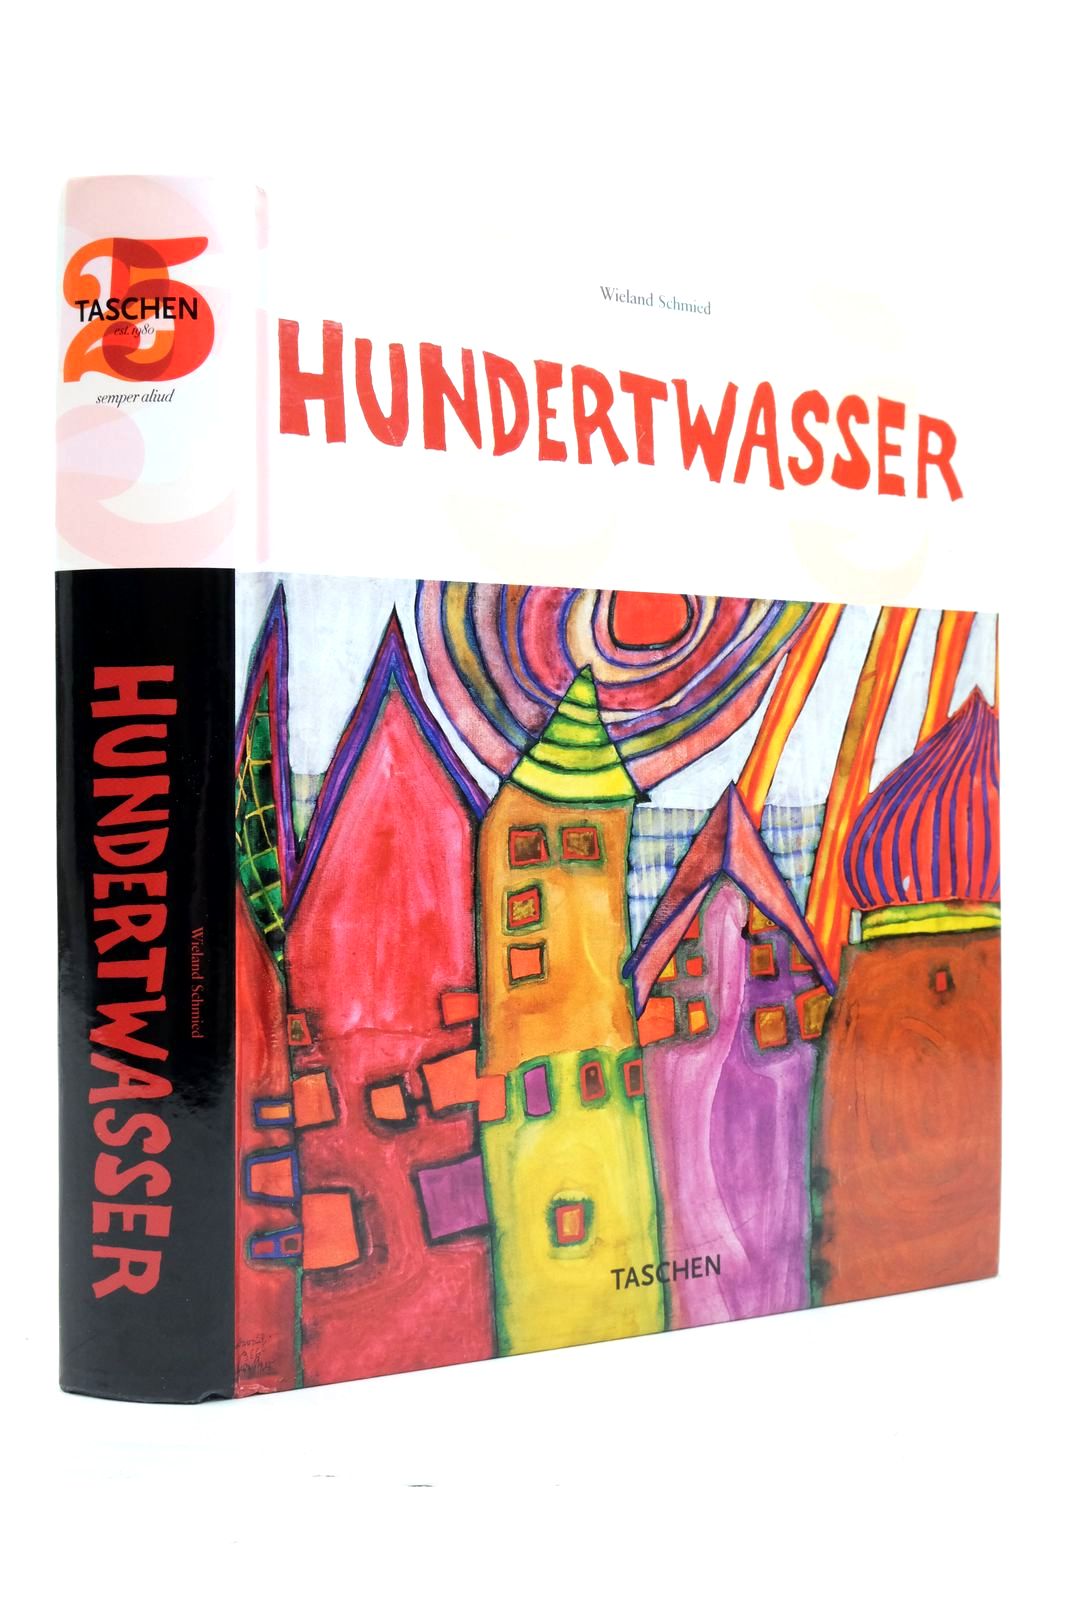 Photo of HUNDERTWASSER 1928 - 2000 written by Schmied, Wieland illustrated by Hundertwasser, Friedereich published by Taschen (STOCK CODE: 2136771)  for sale by Stella & Rose's Books